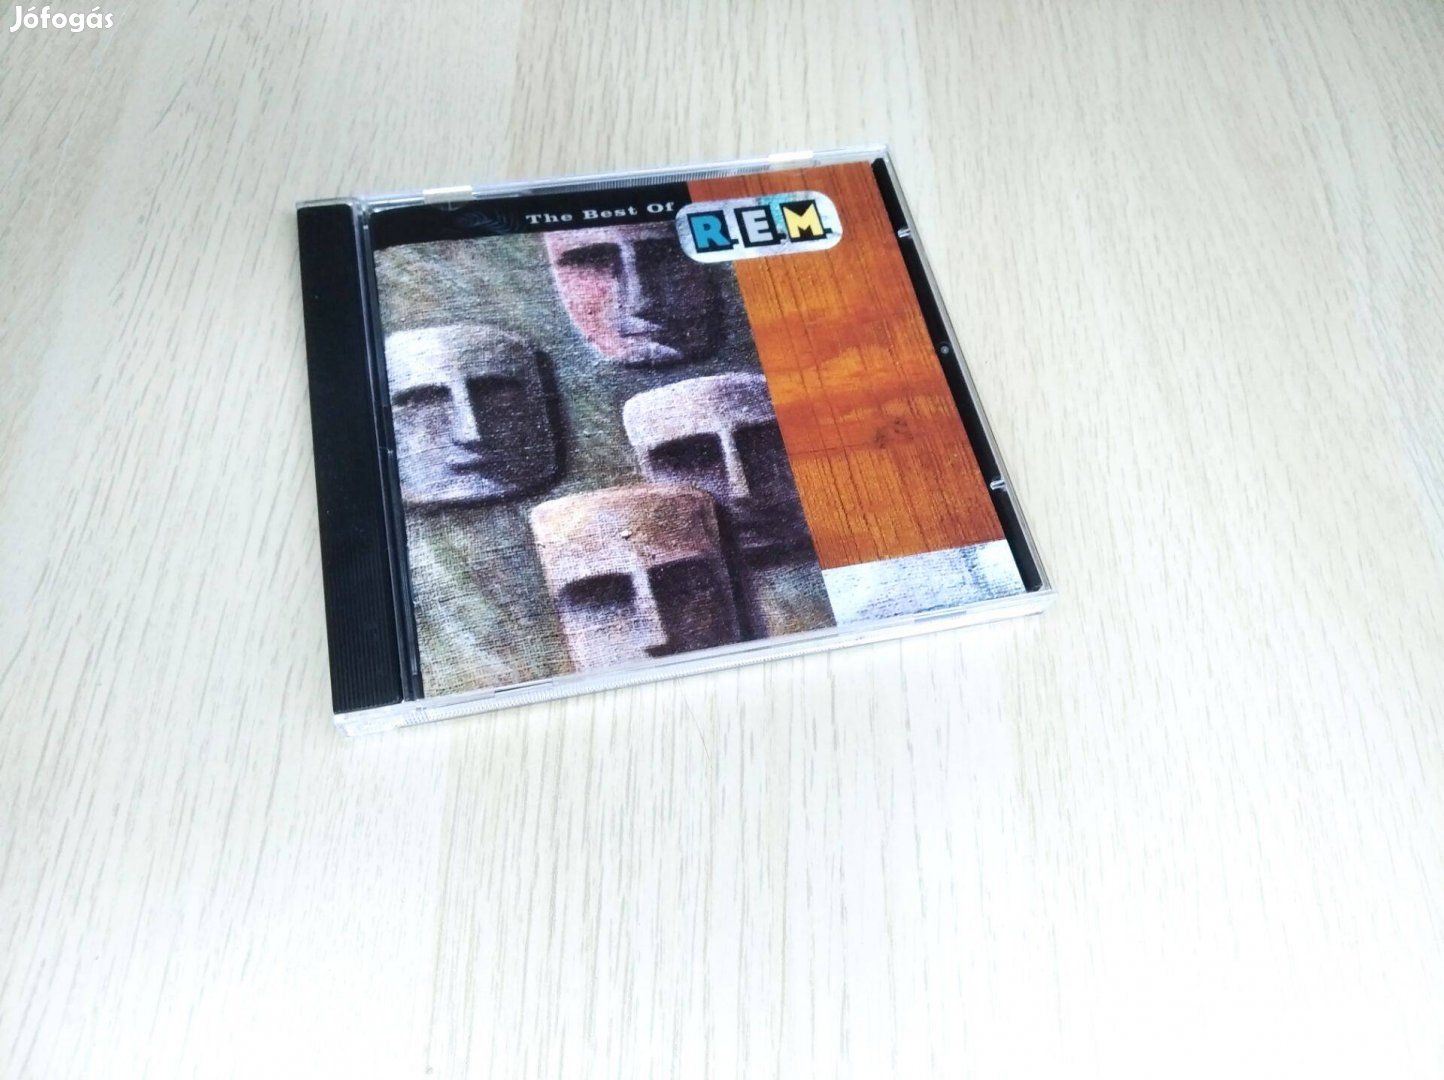 R.E.M. - The Best Of R.E.M. / CD